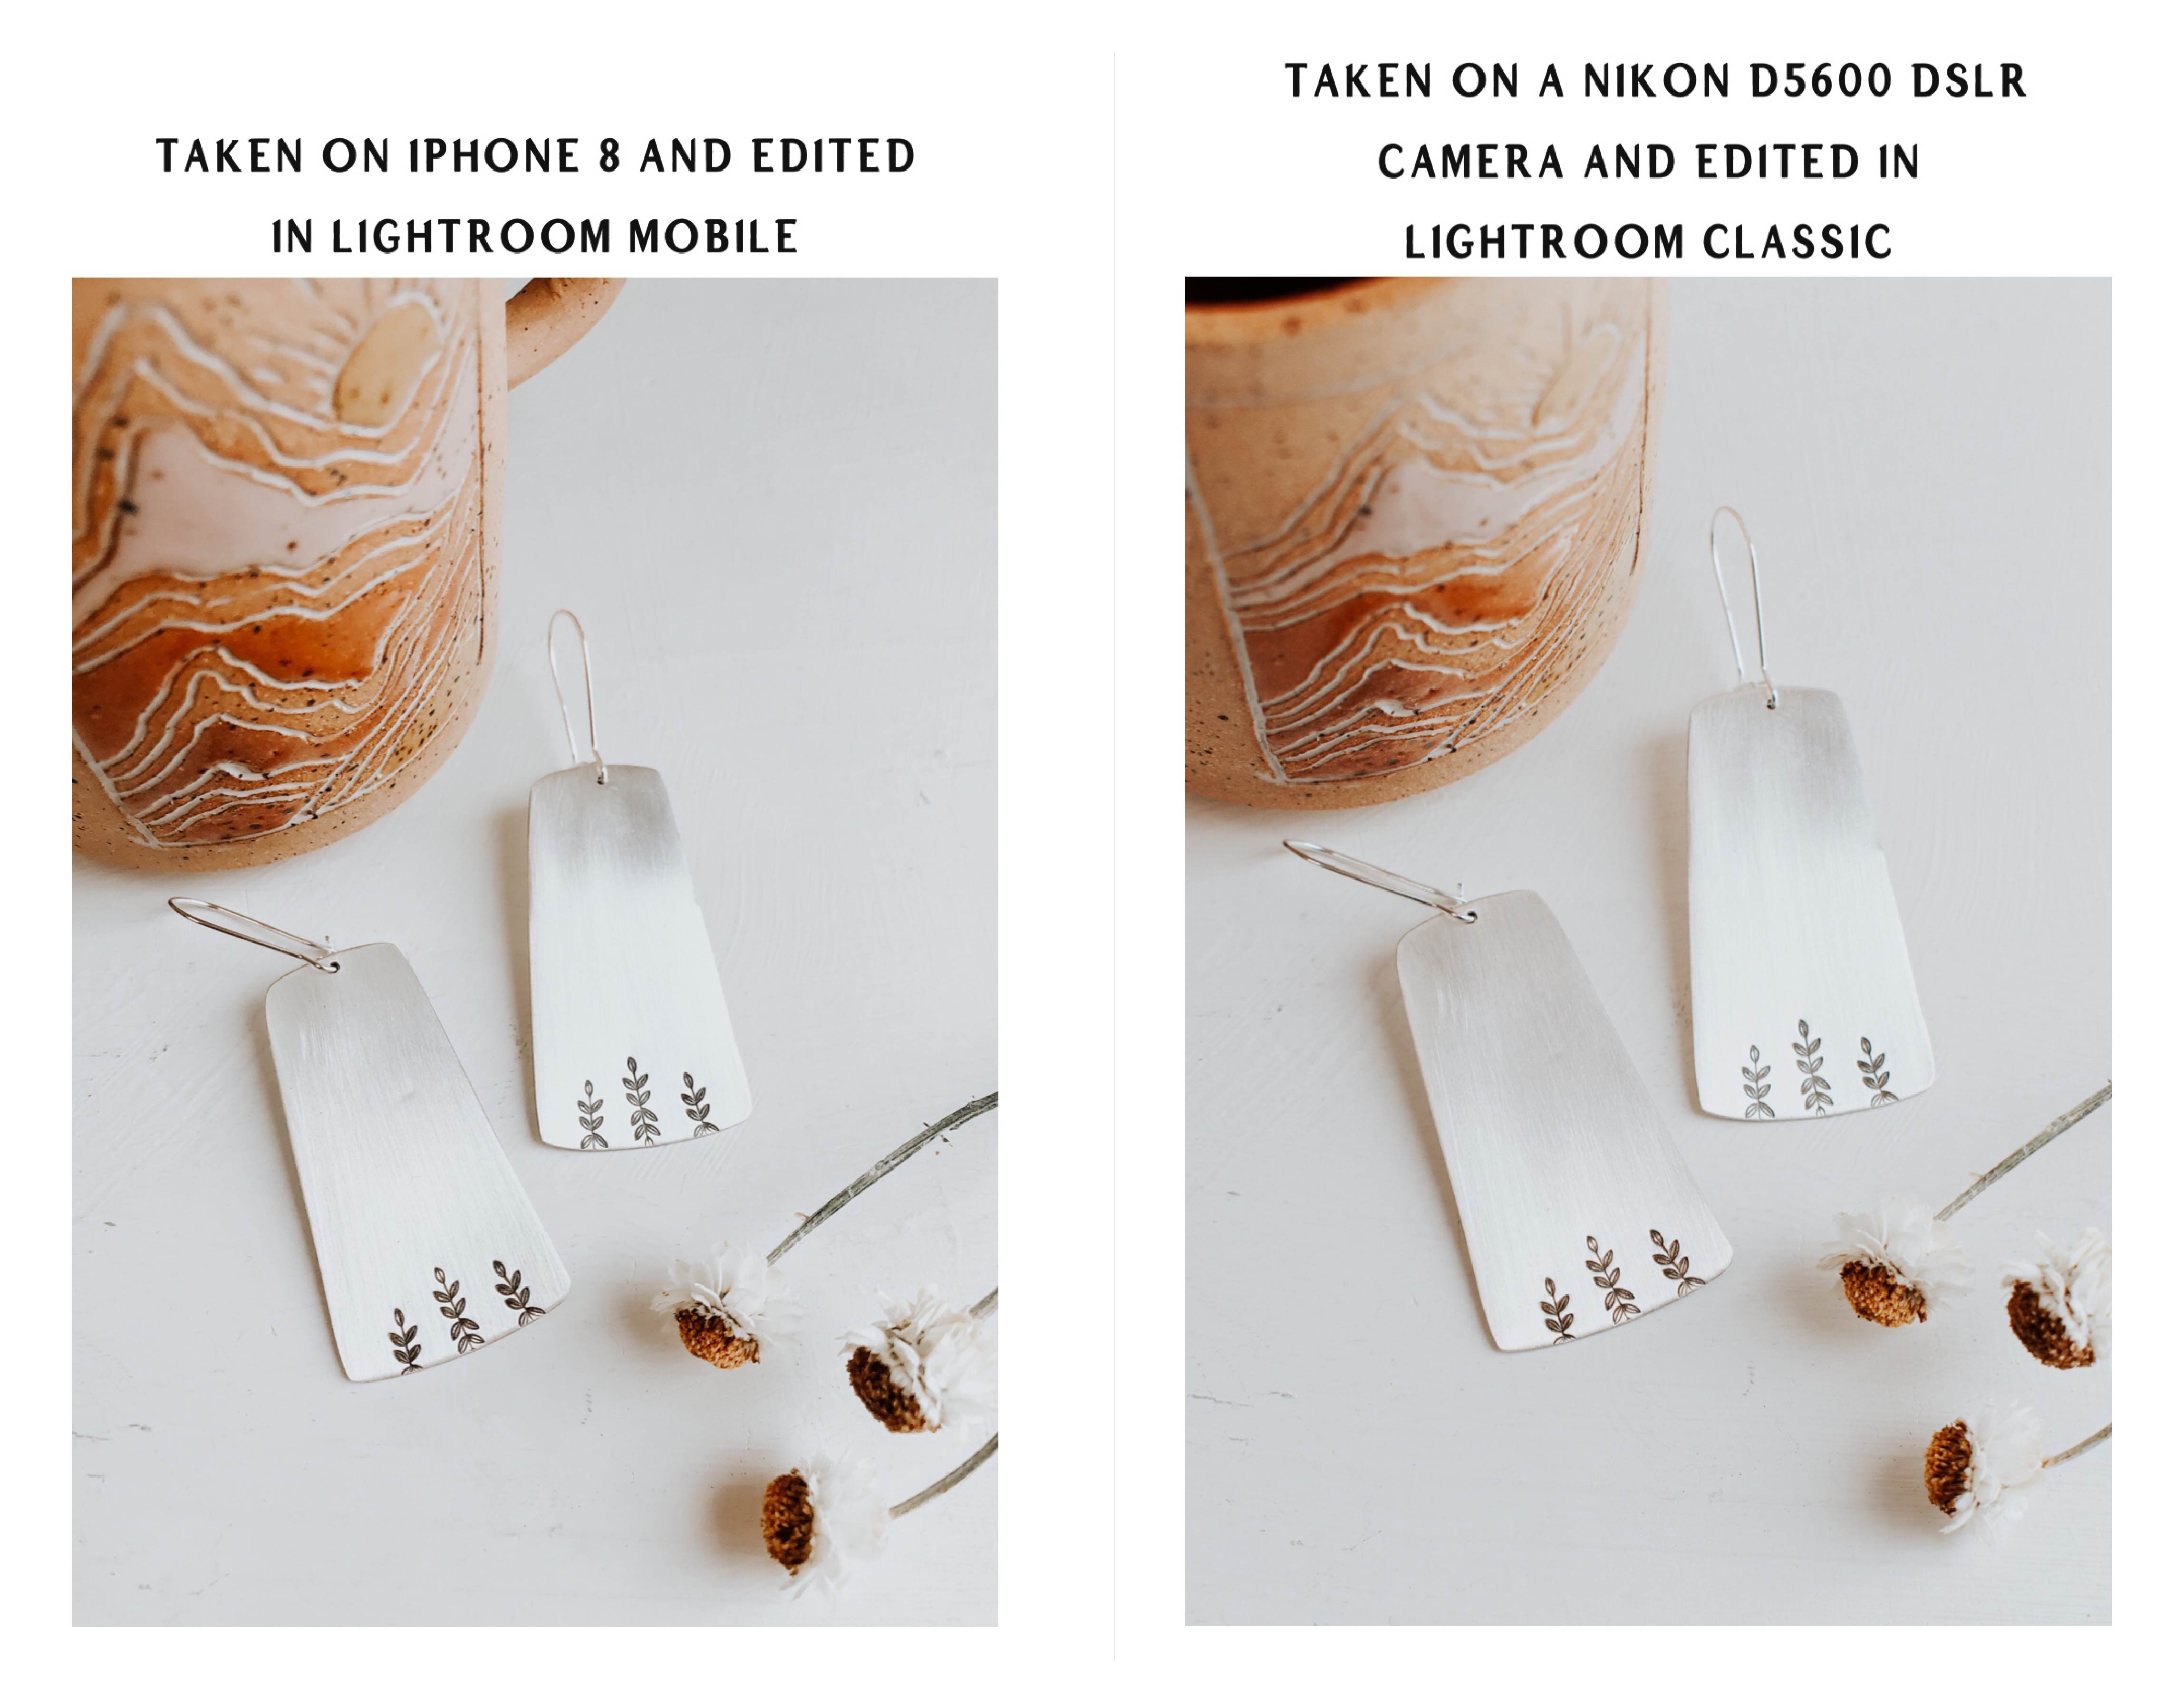 Photo of jewelry taken on an iPhone 8 vs. a Nikon D5600 DSLR camera